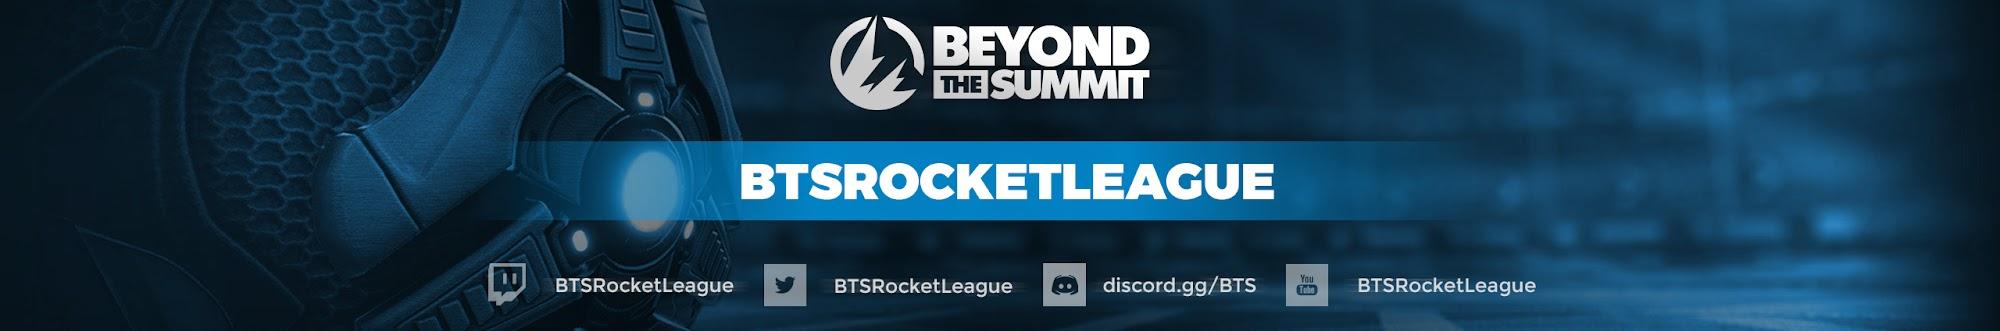 Beyond The Summit - Rocket League